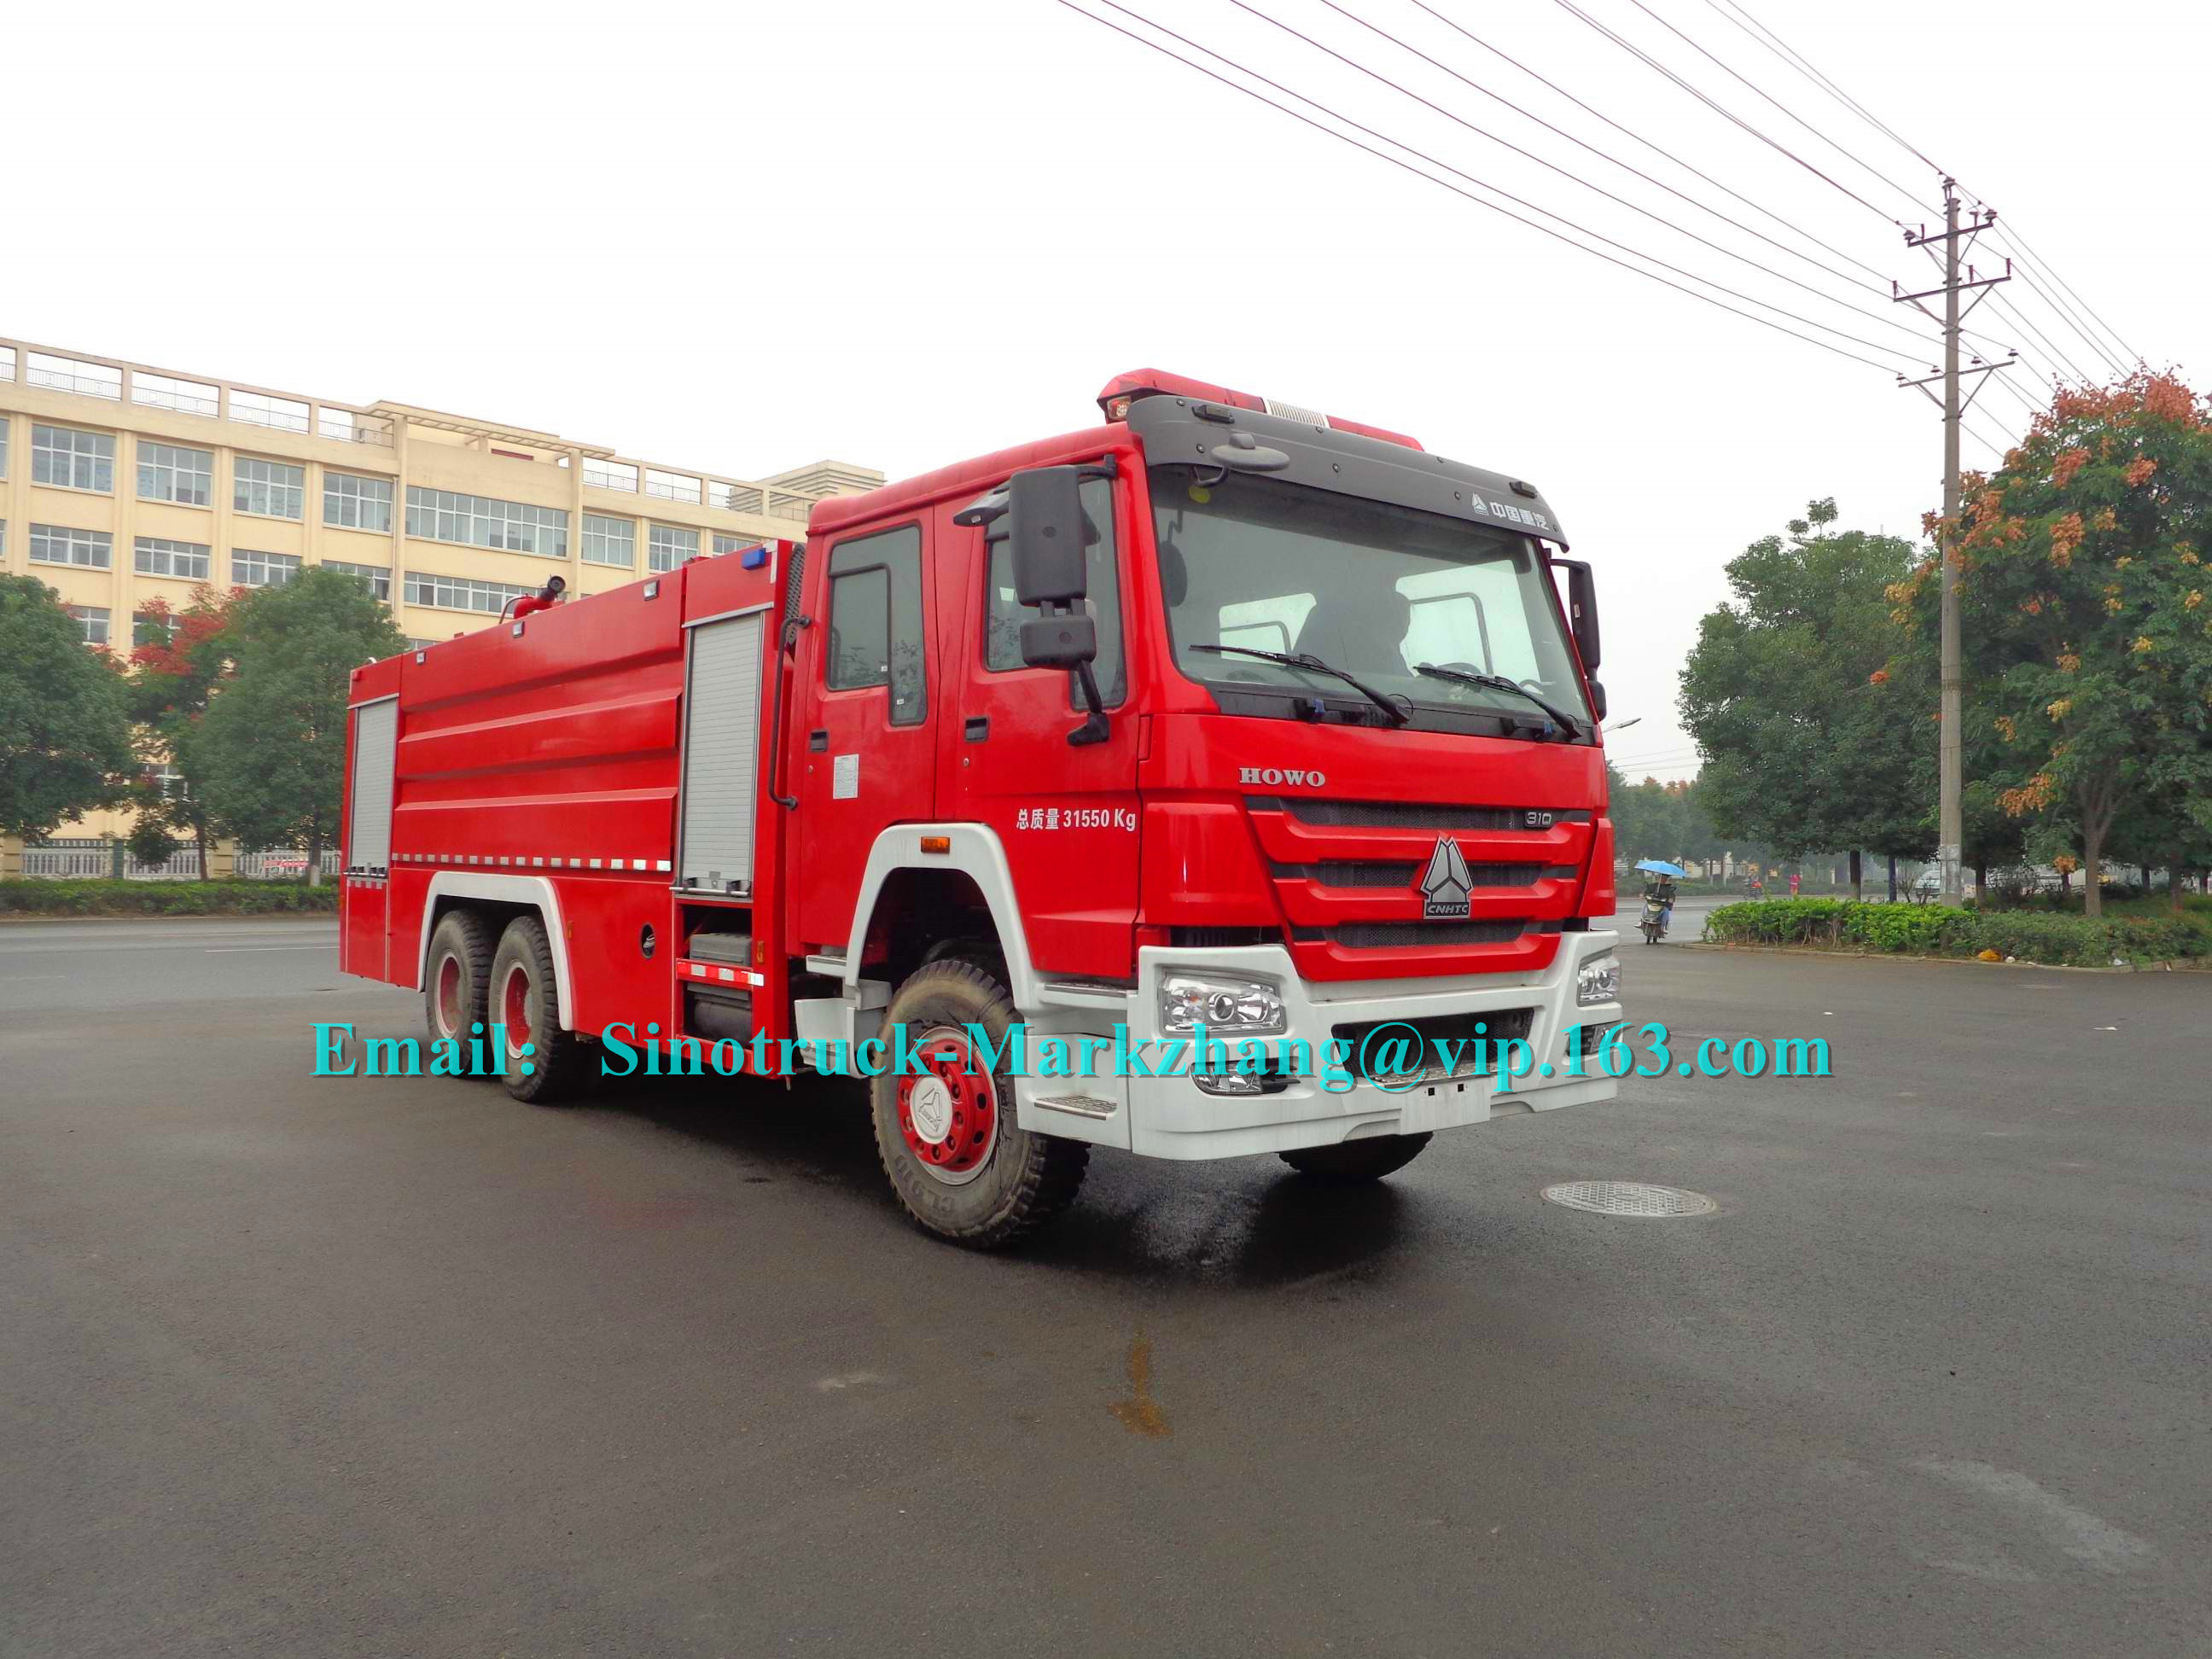 10 Wheelers الأمن لواء المطافئ شاحنة إطفاء الحرائق المركبات 3 المحور LHD / RHD القيادة